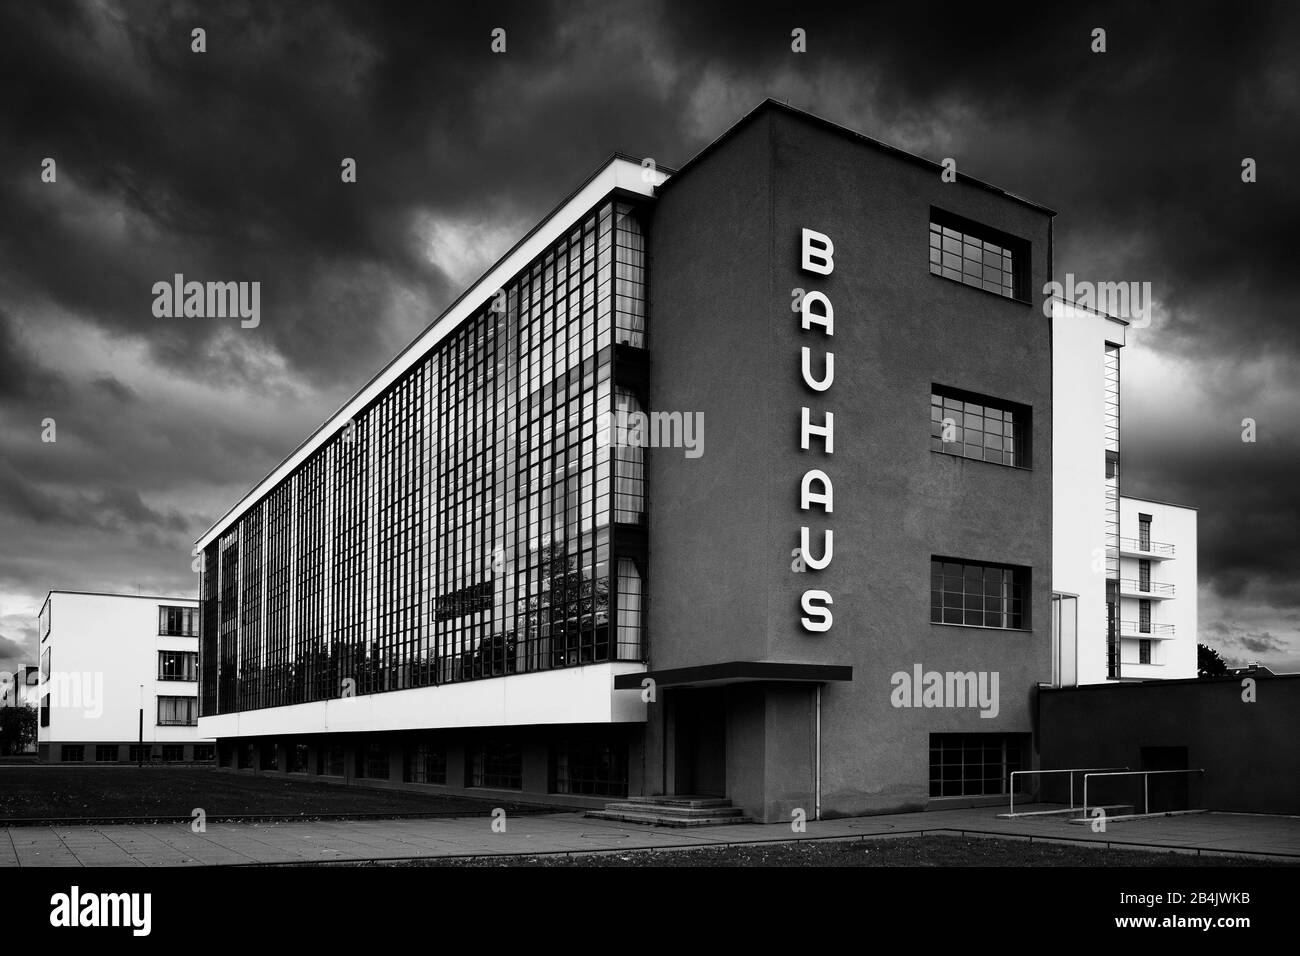 Bauhaus emblem -Fotos und -Bildmaterial in hoher Auflösung – Alamy